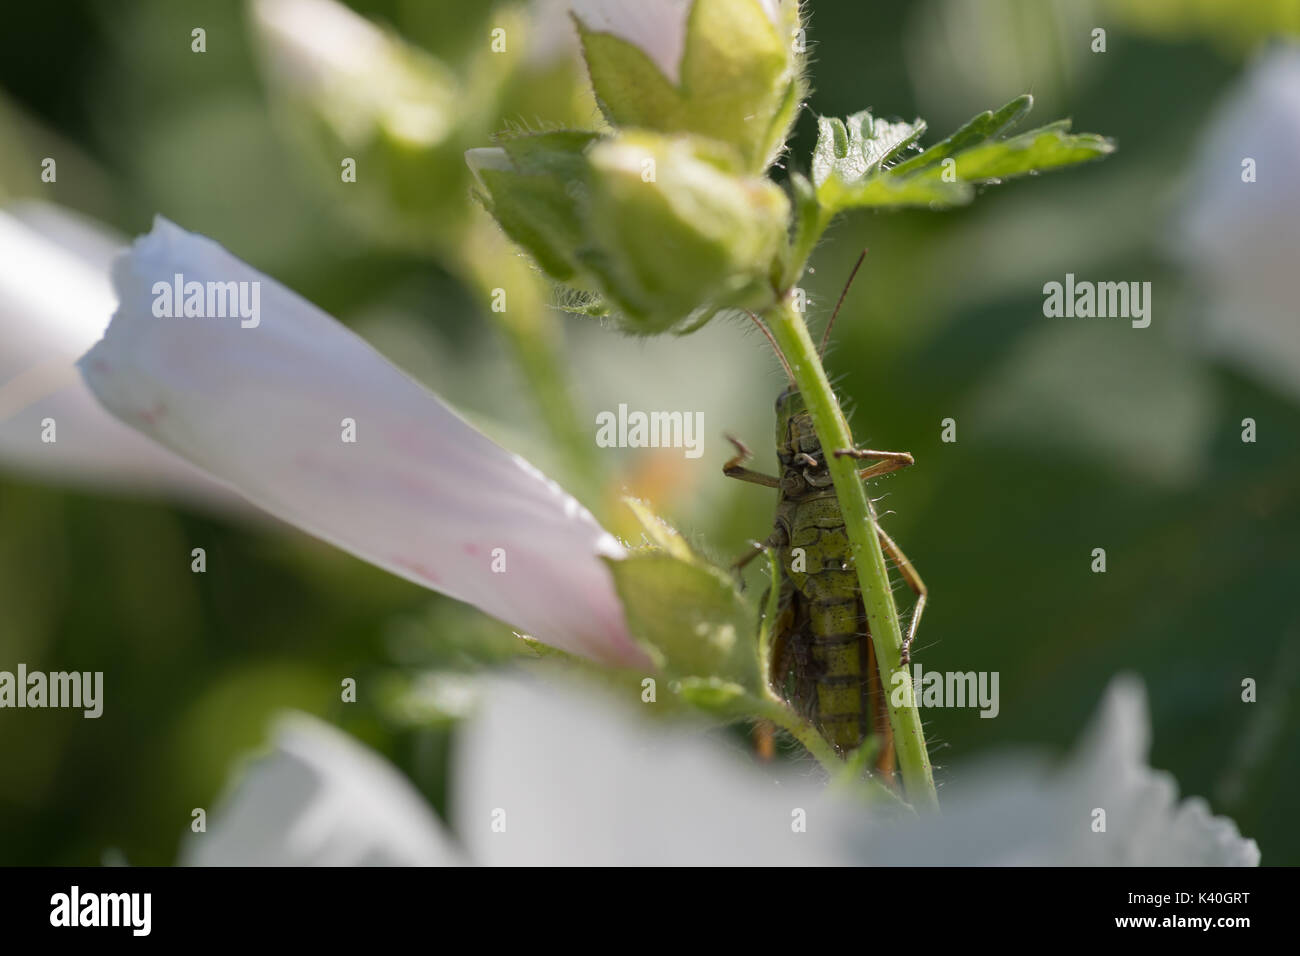 Grasshopper and white flowers. Stock Photo